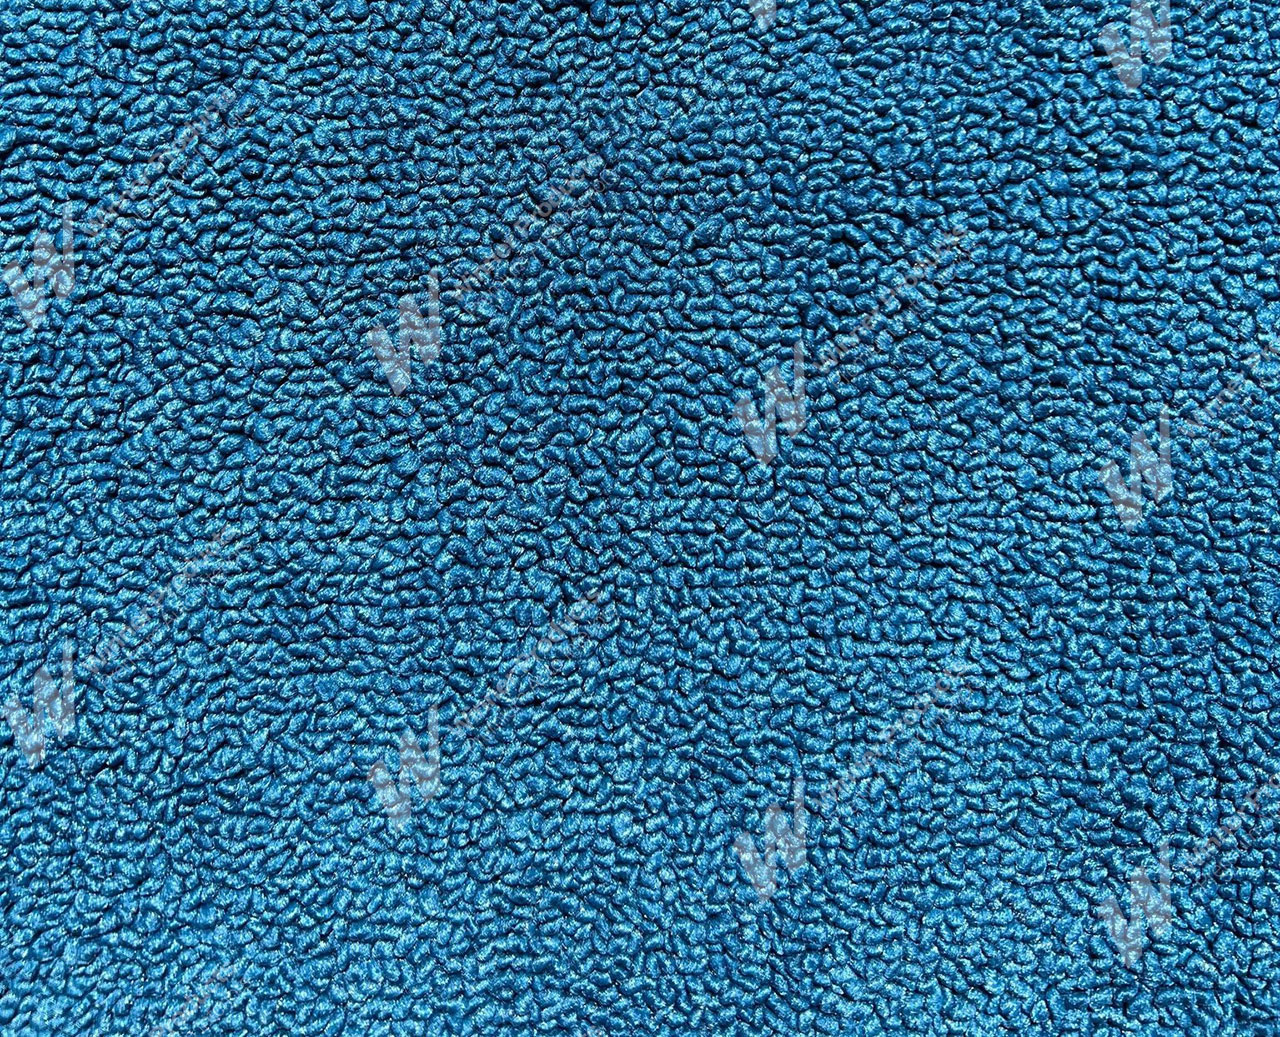 Holden Kingswood HZ Kingswood Ute 23T Light Blue & Cloth Carpet (Image 1 of 1)